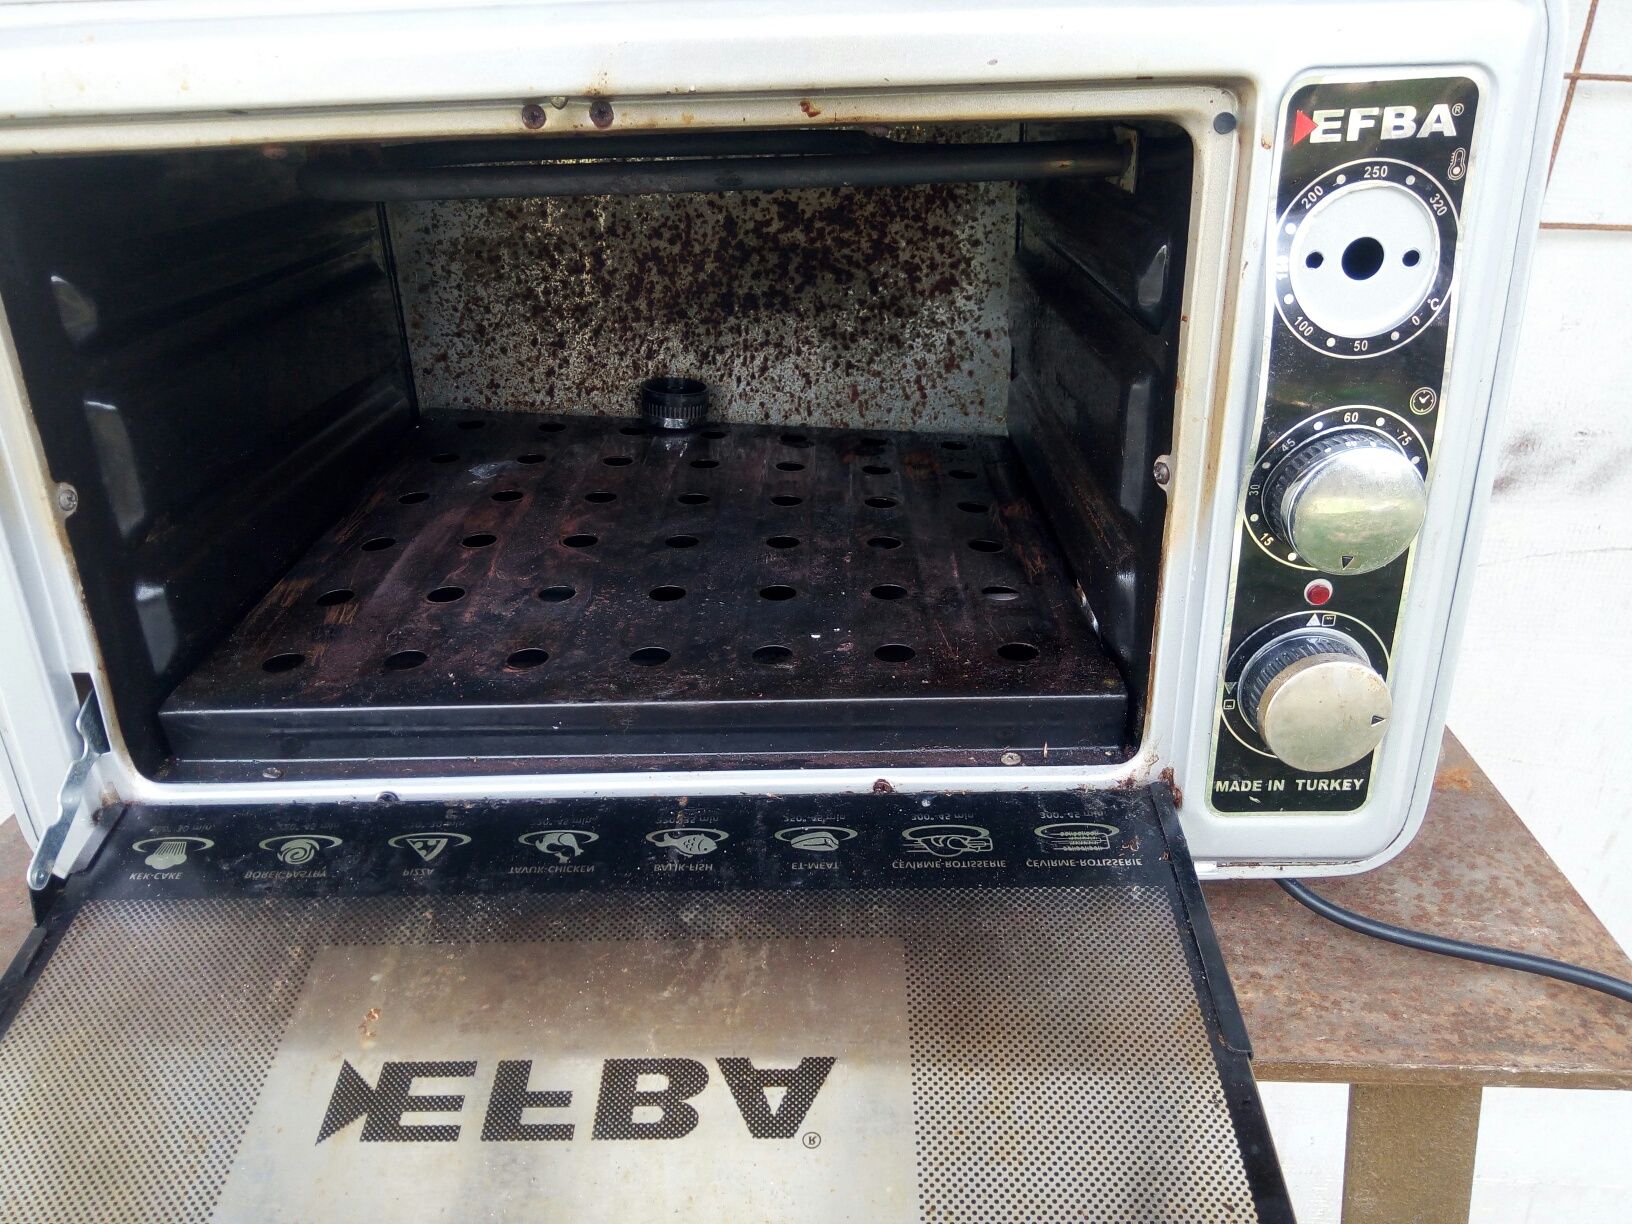 Efba 1003 1500w cuptor electric